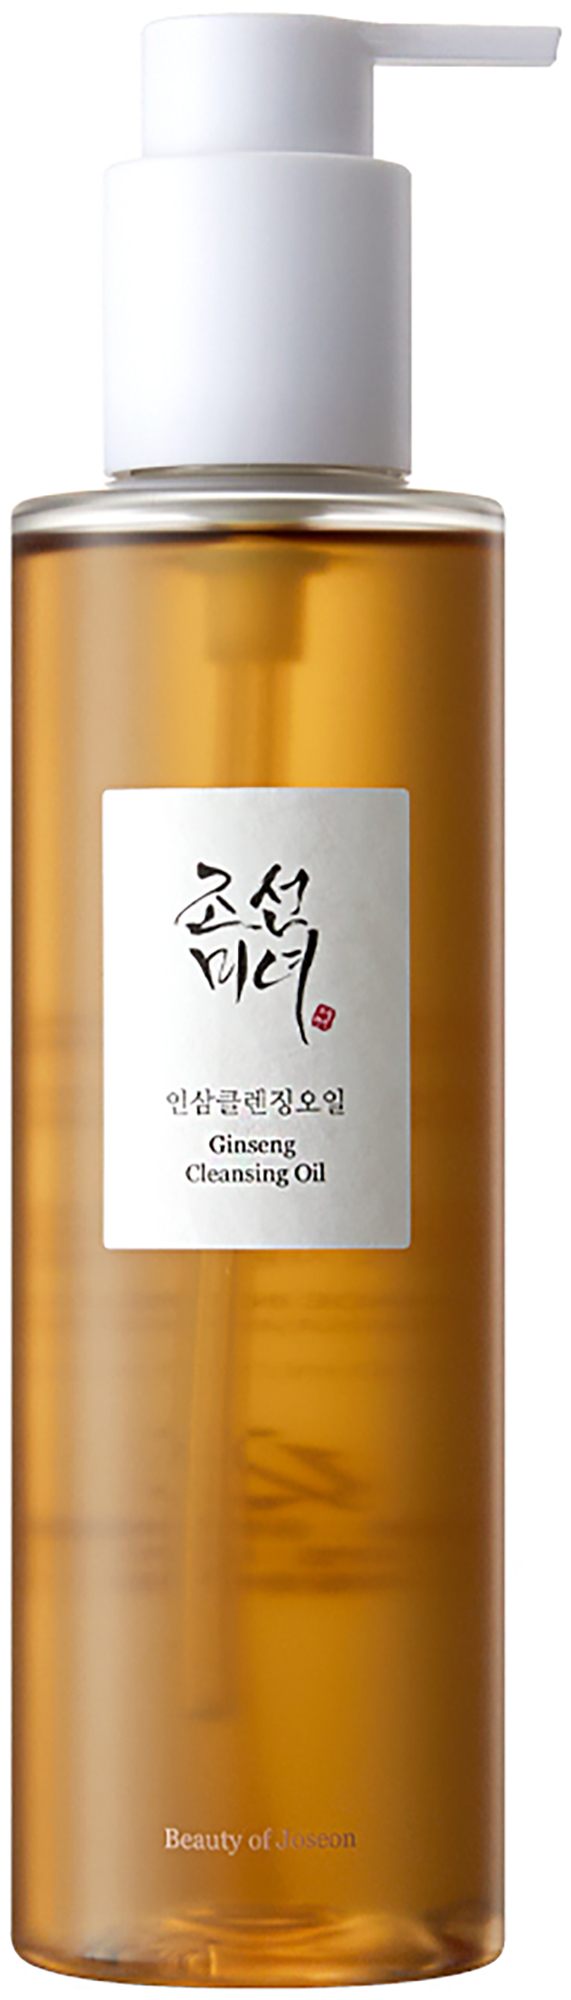 Beauty of Joseon Čisticí olej Ginseng (Cleansing Oil) 210 ml